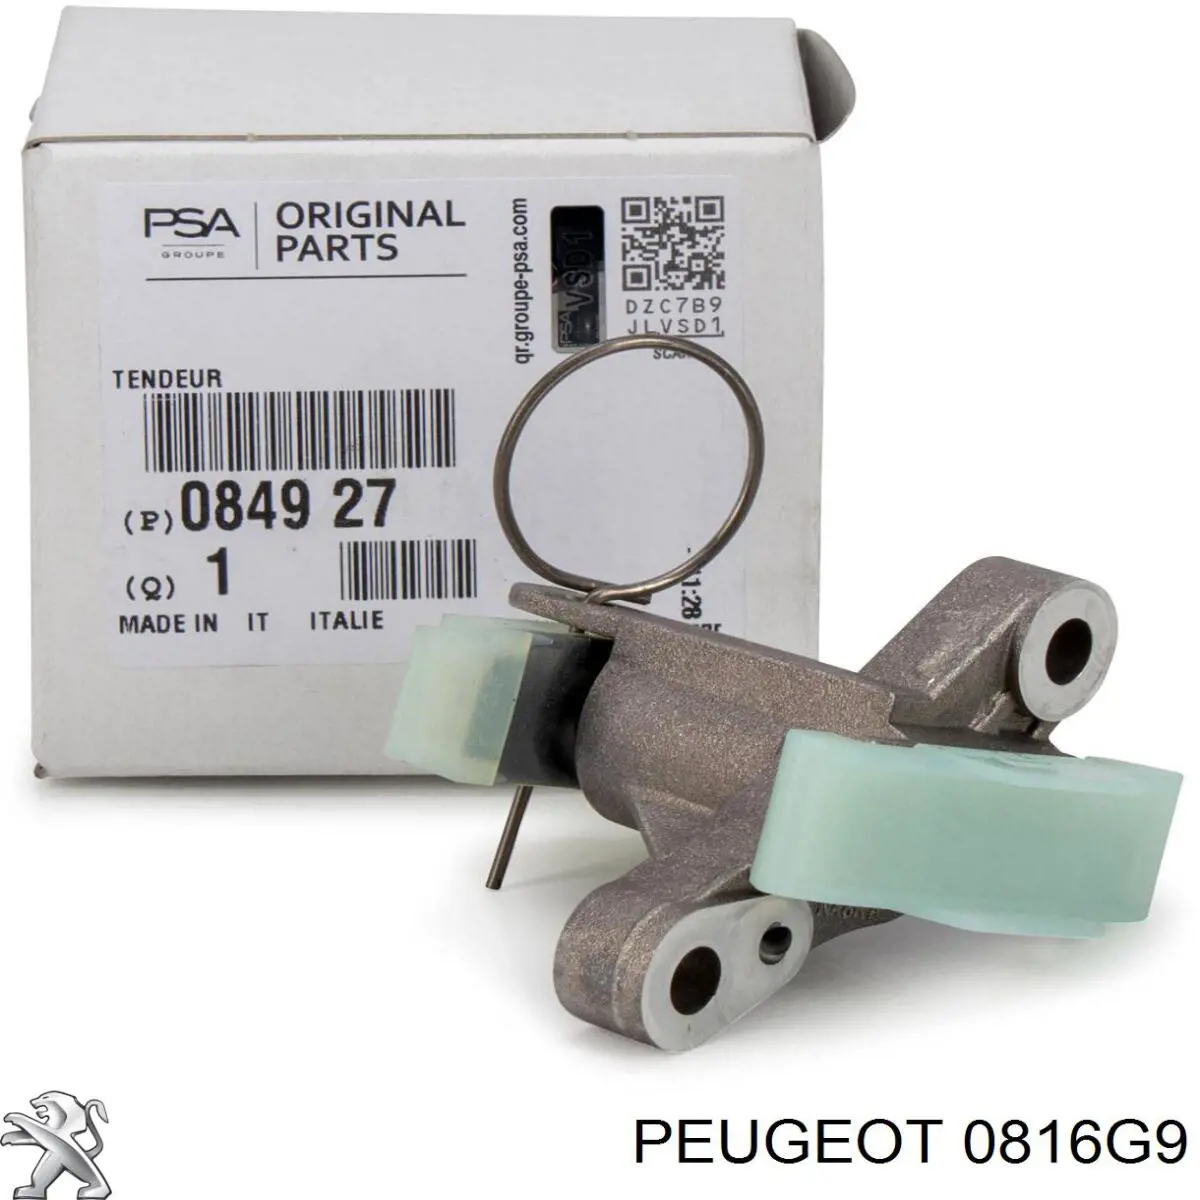 0816G9 Peugeot/Citroen ланцюг грм, верхня